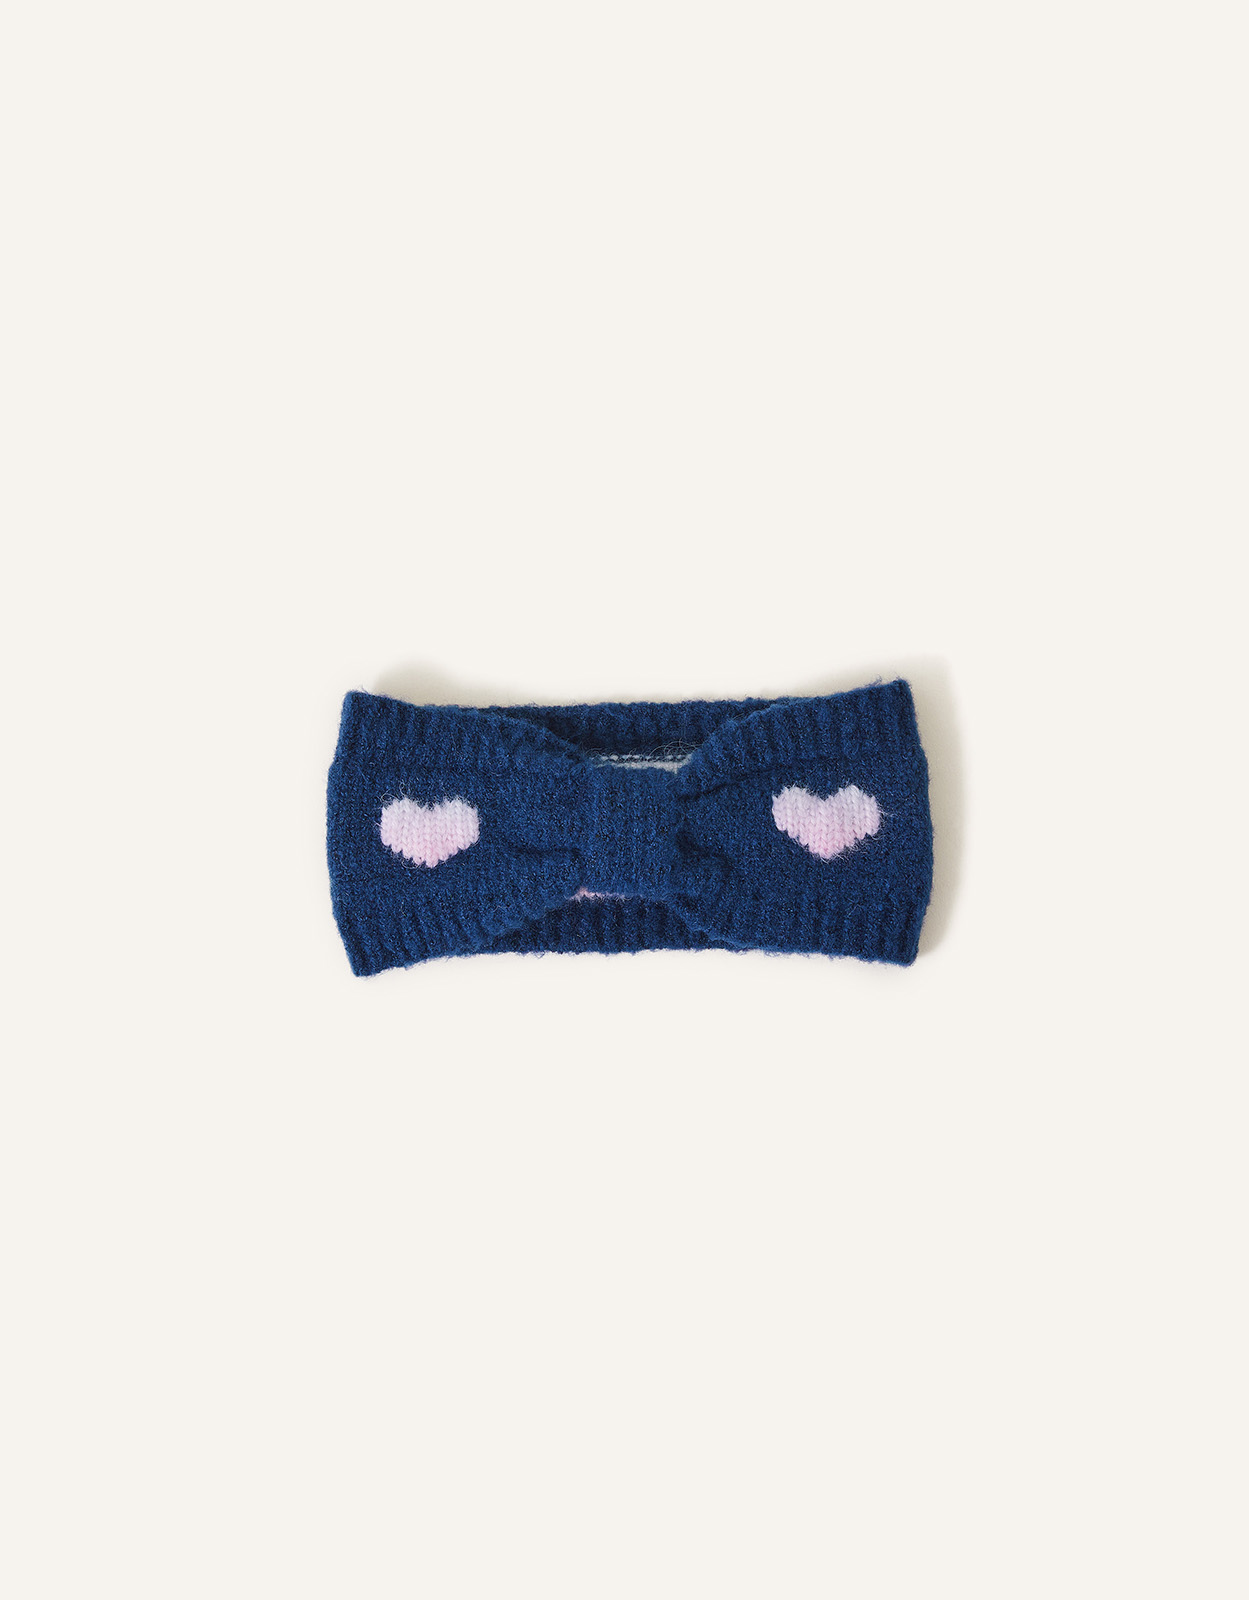 Accessorize Women's Girls Heart Knit Bando, Size: 22cm